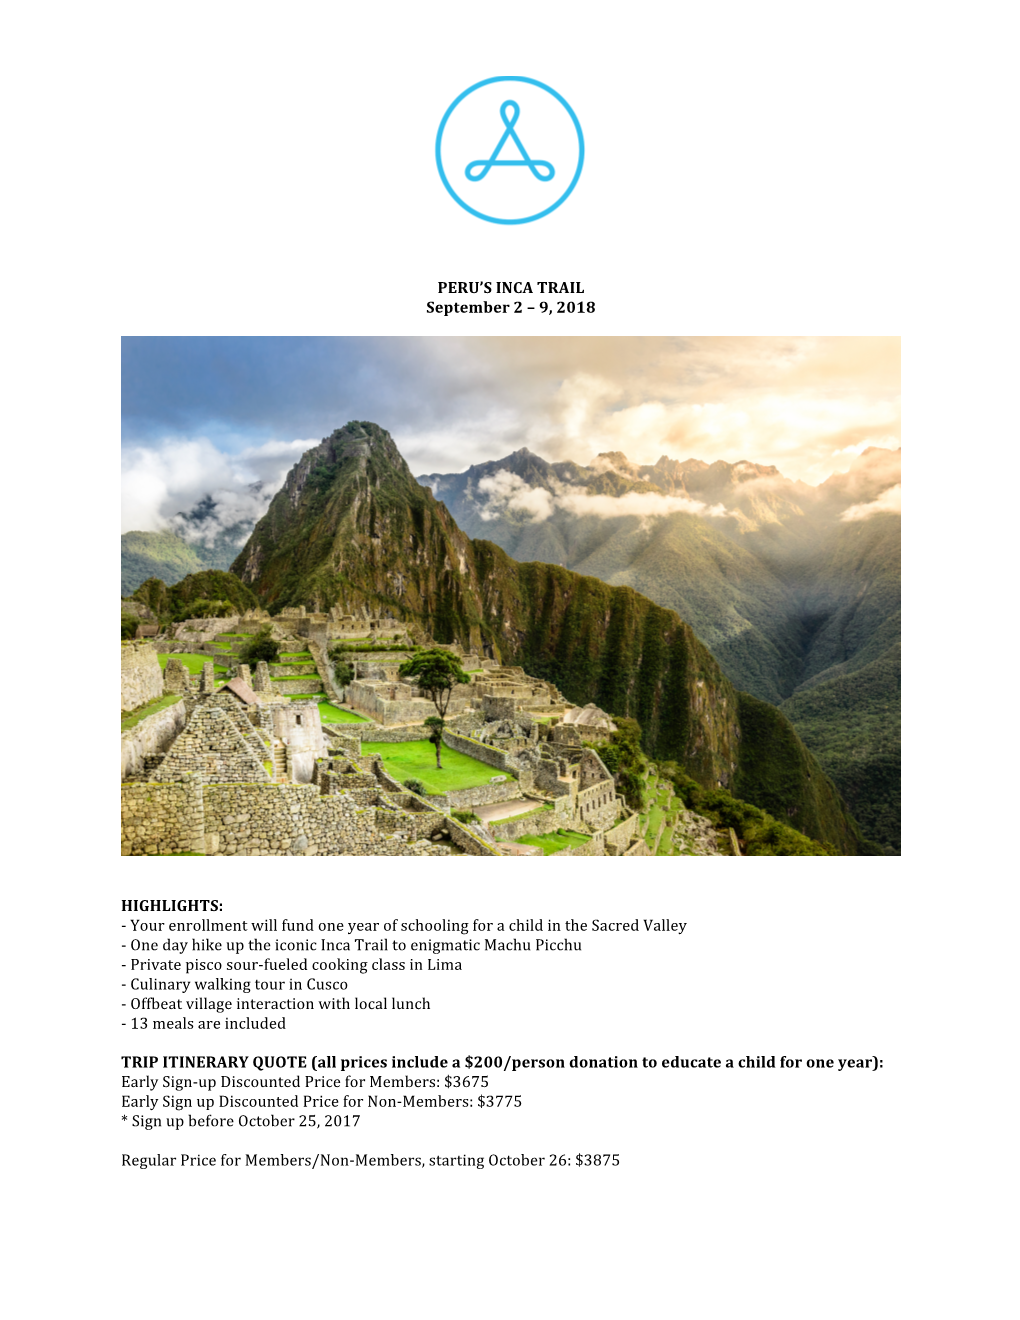 PERU's INCA TRAIL September 2